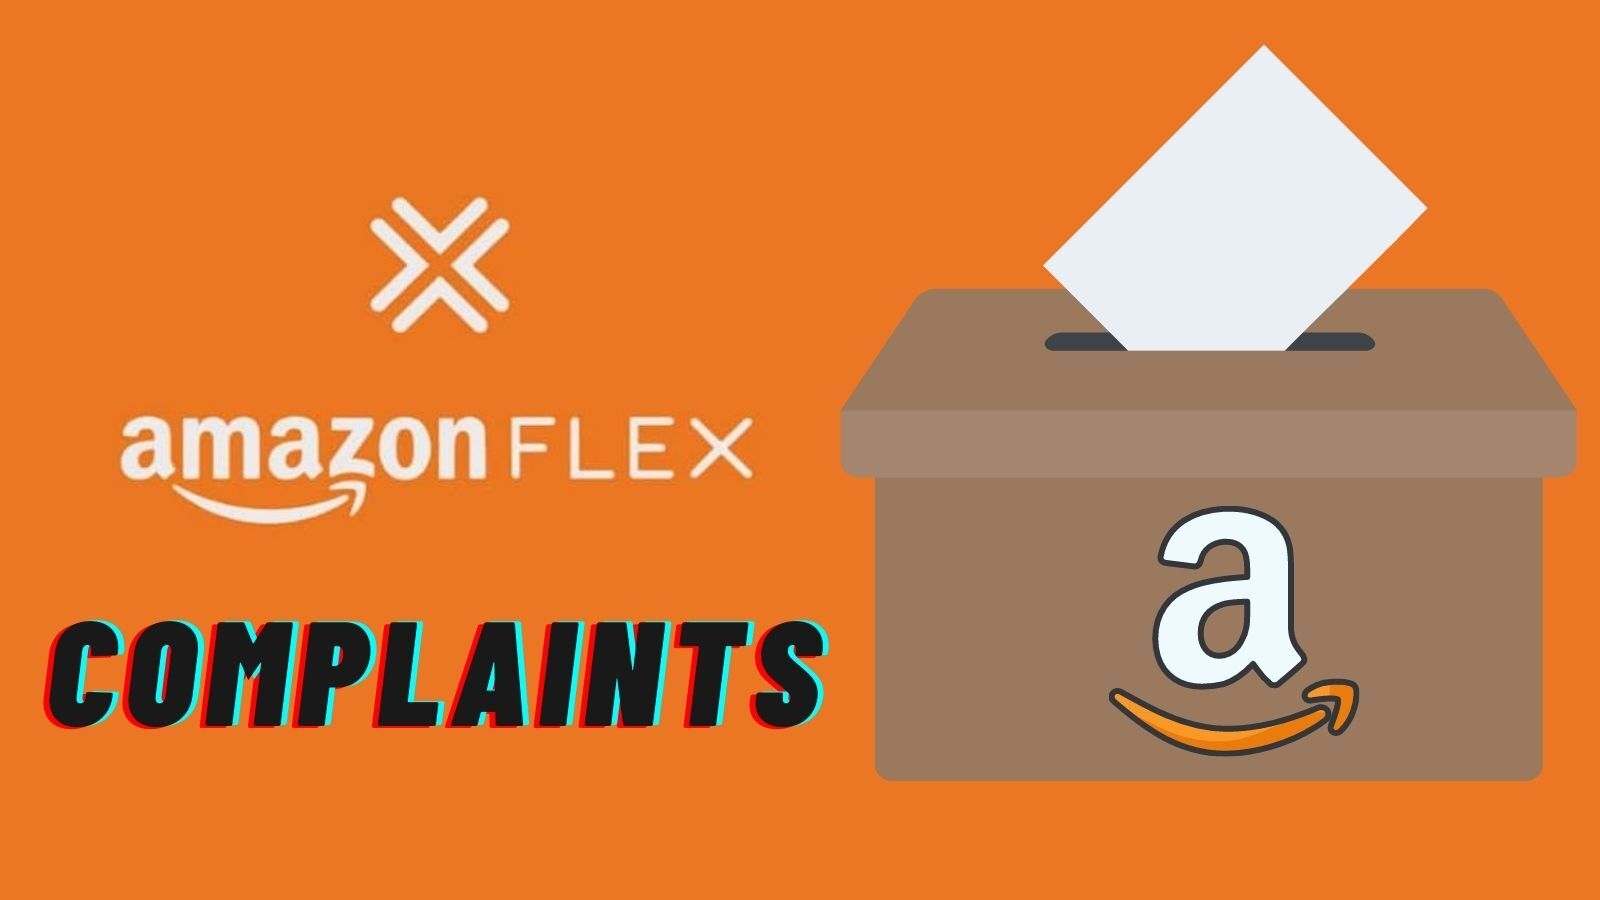 Amazon Flex Complaints: For Amazon Flex Customers and Drivers